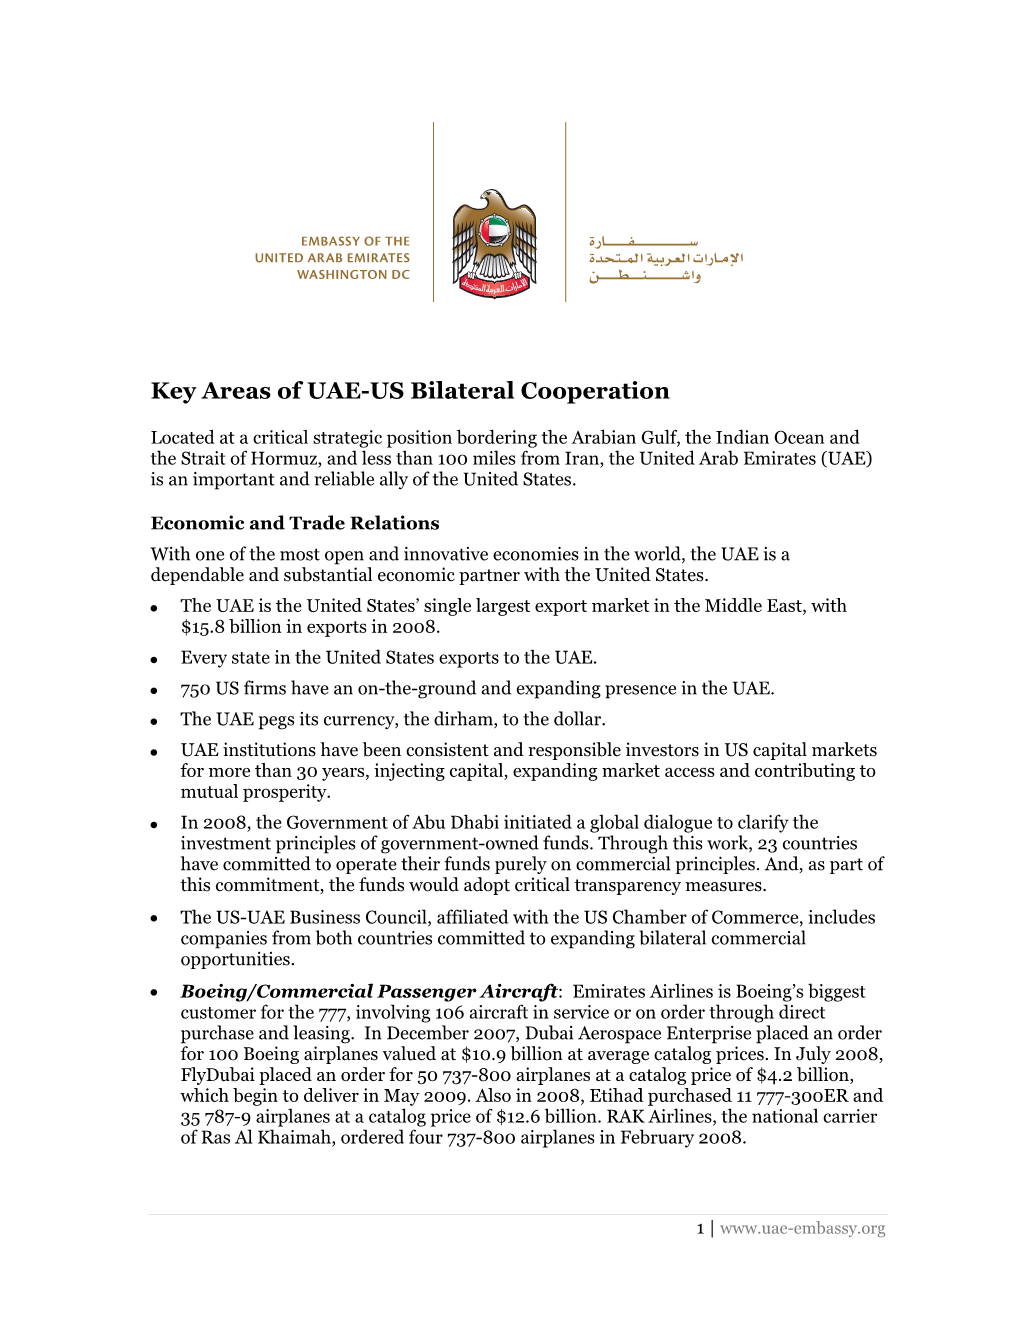 UAE-US Bilateral Cooperation